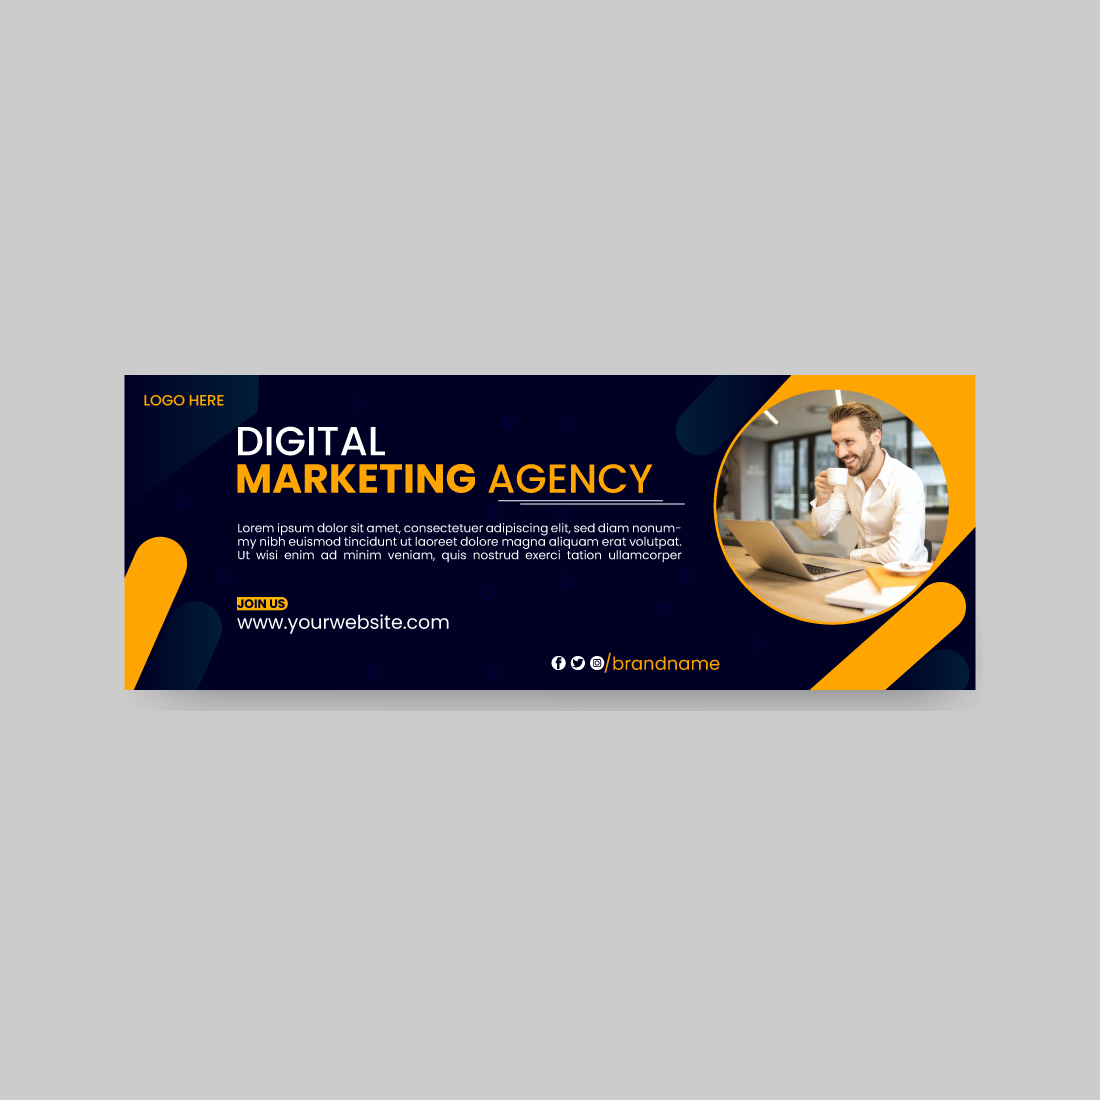 Digital Marketing Agency Facebook Cover Design Template Cover.